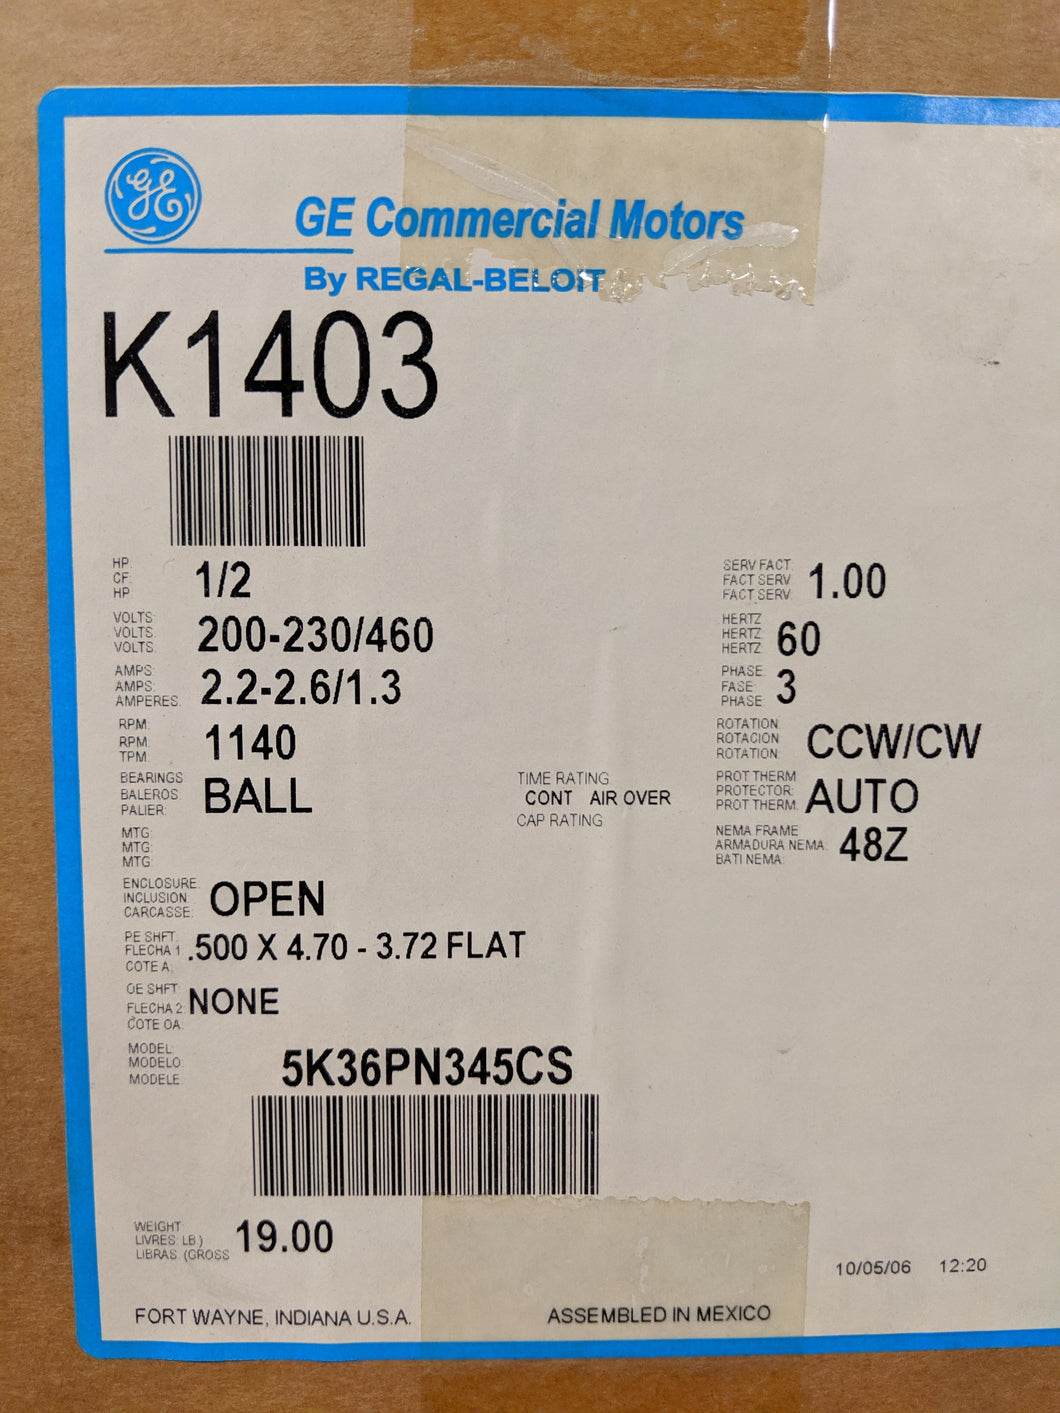 GE K1403, 1/2 HP, 200-230/460 Volts, 5K36PN345CS